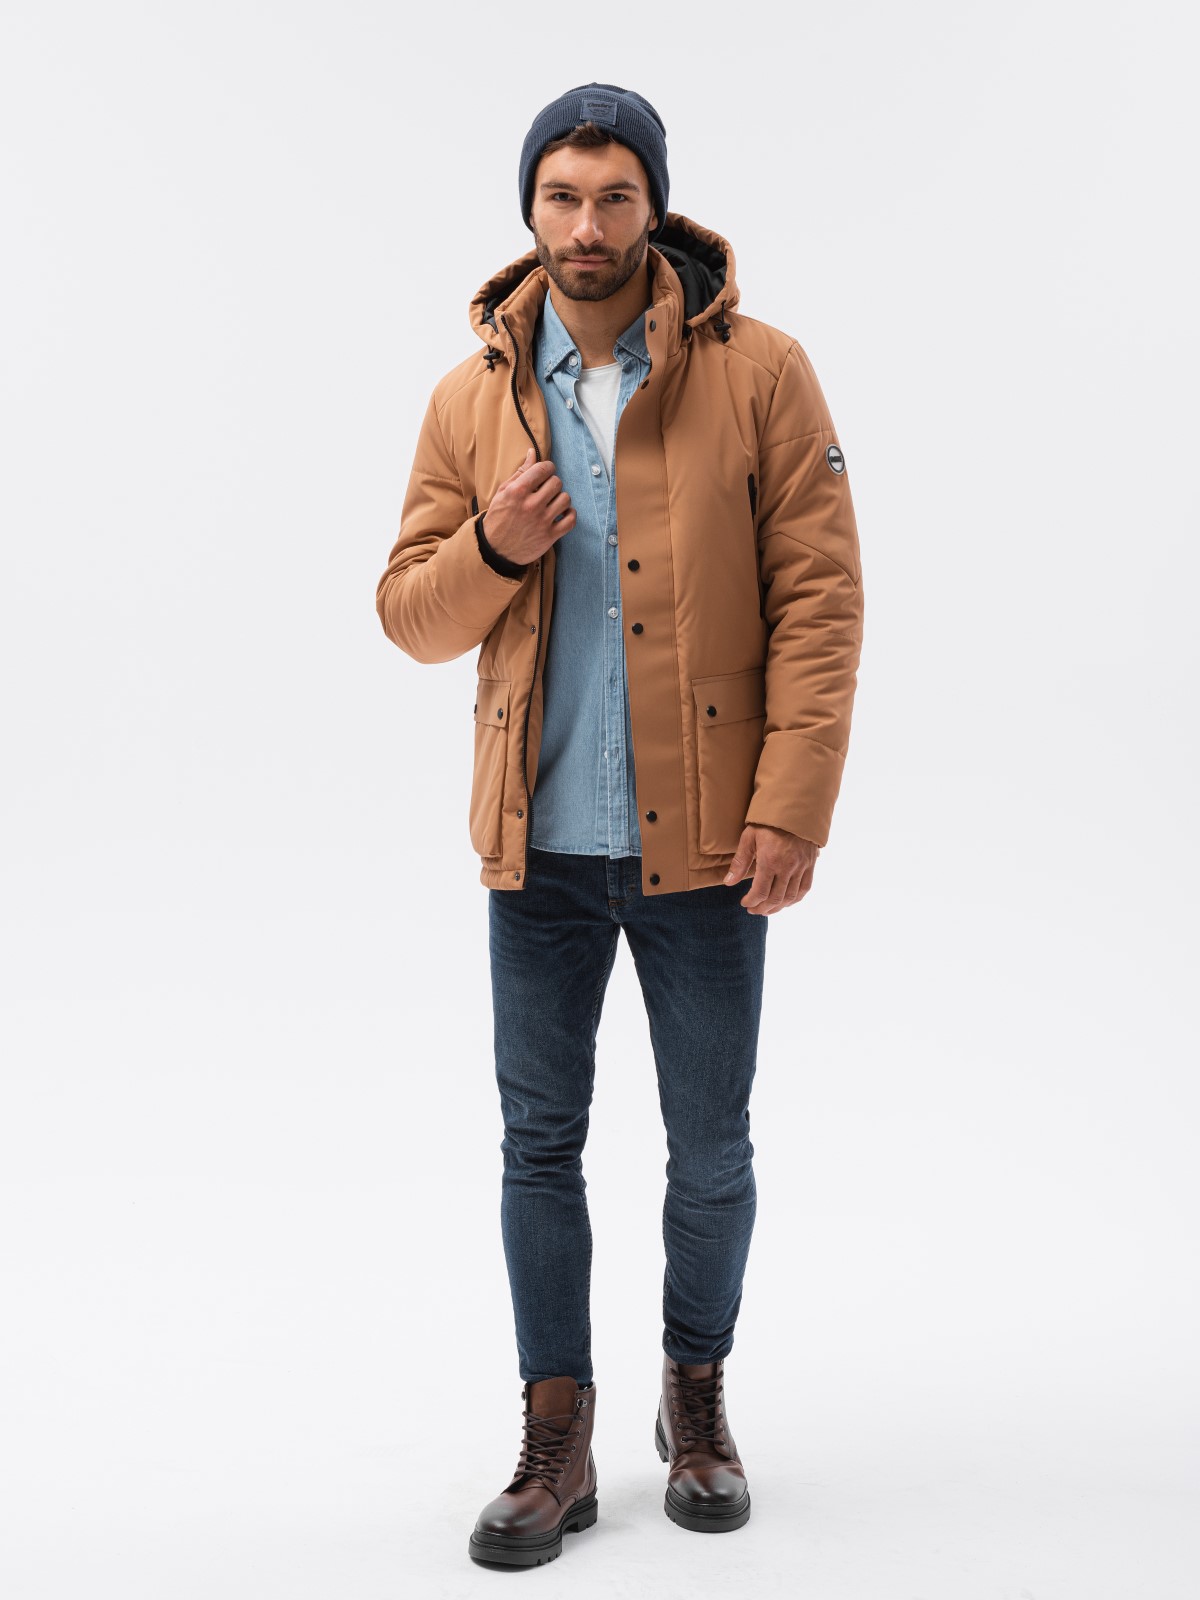 Men's winter jacket C449 - brown | MODONE wholesale - Clothing For Men